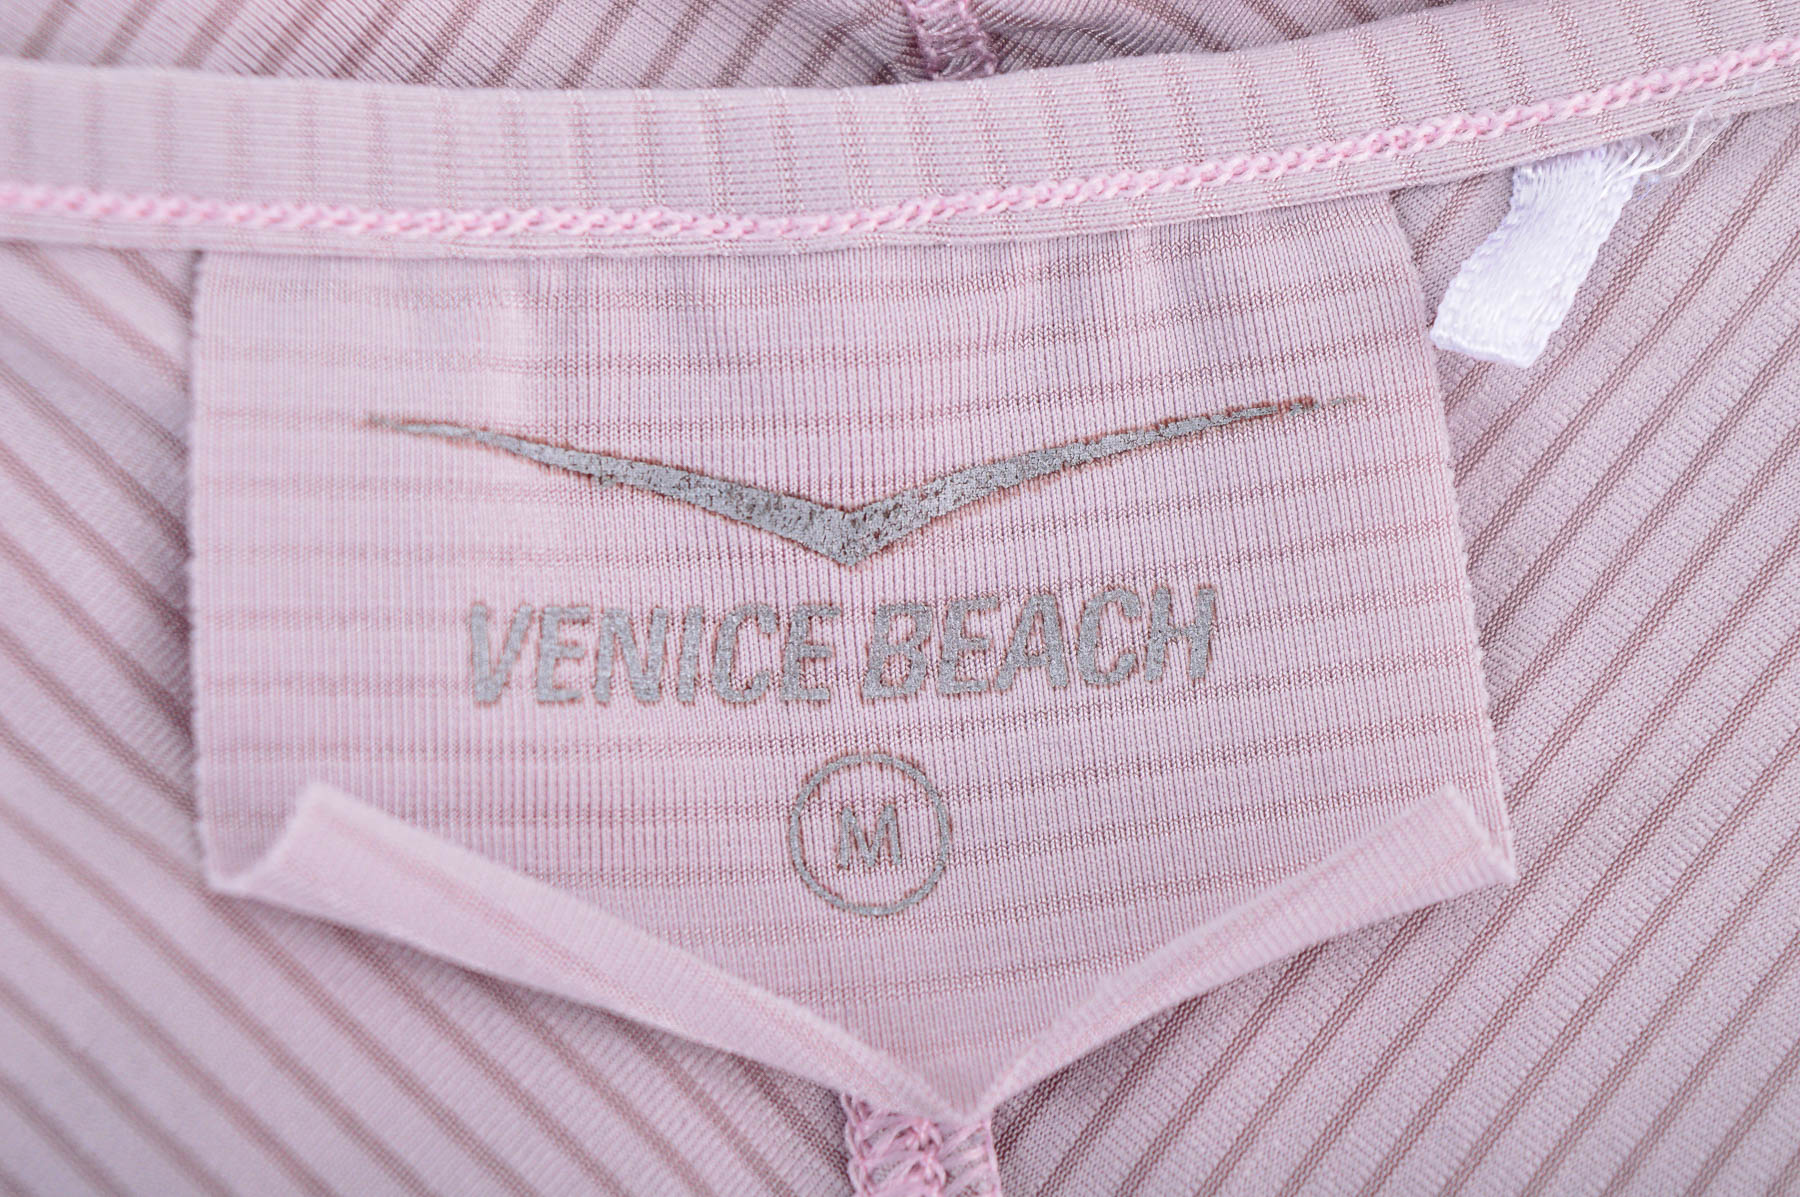 Damski podkoszulek - Venice Beach - 2